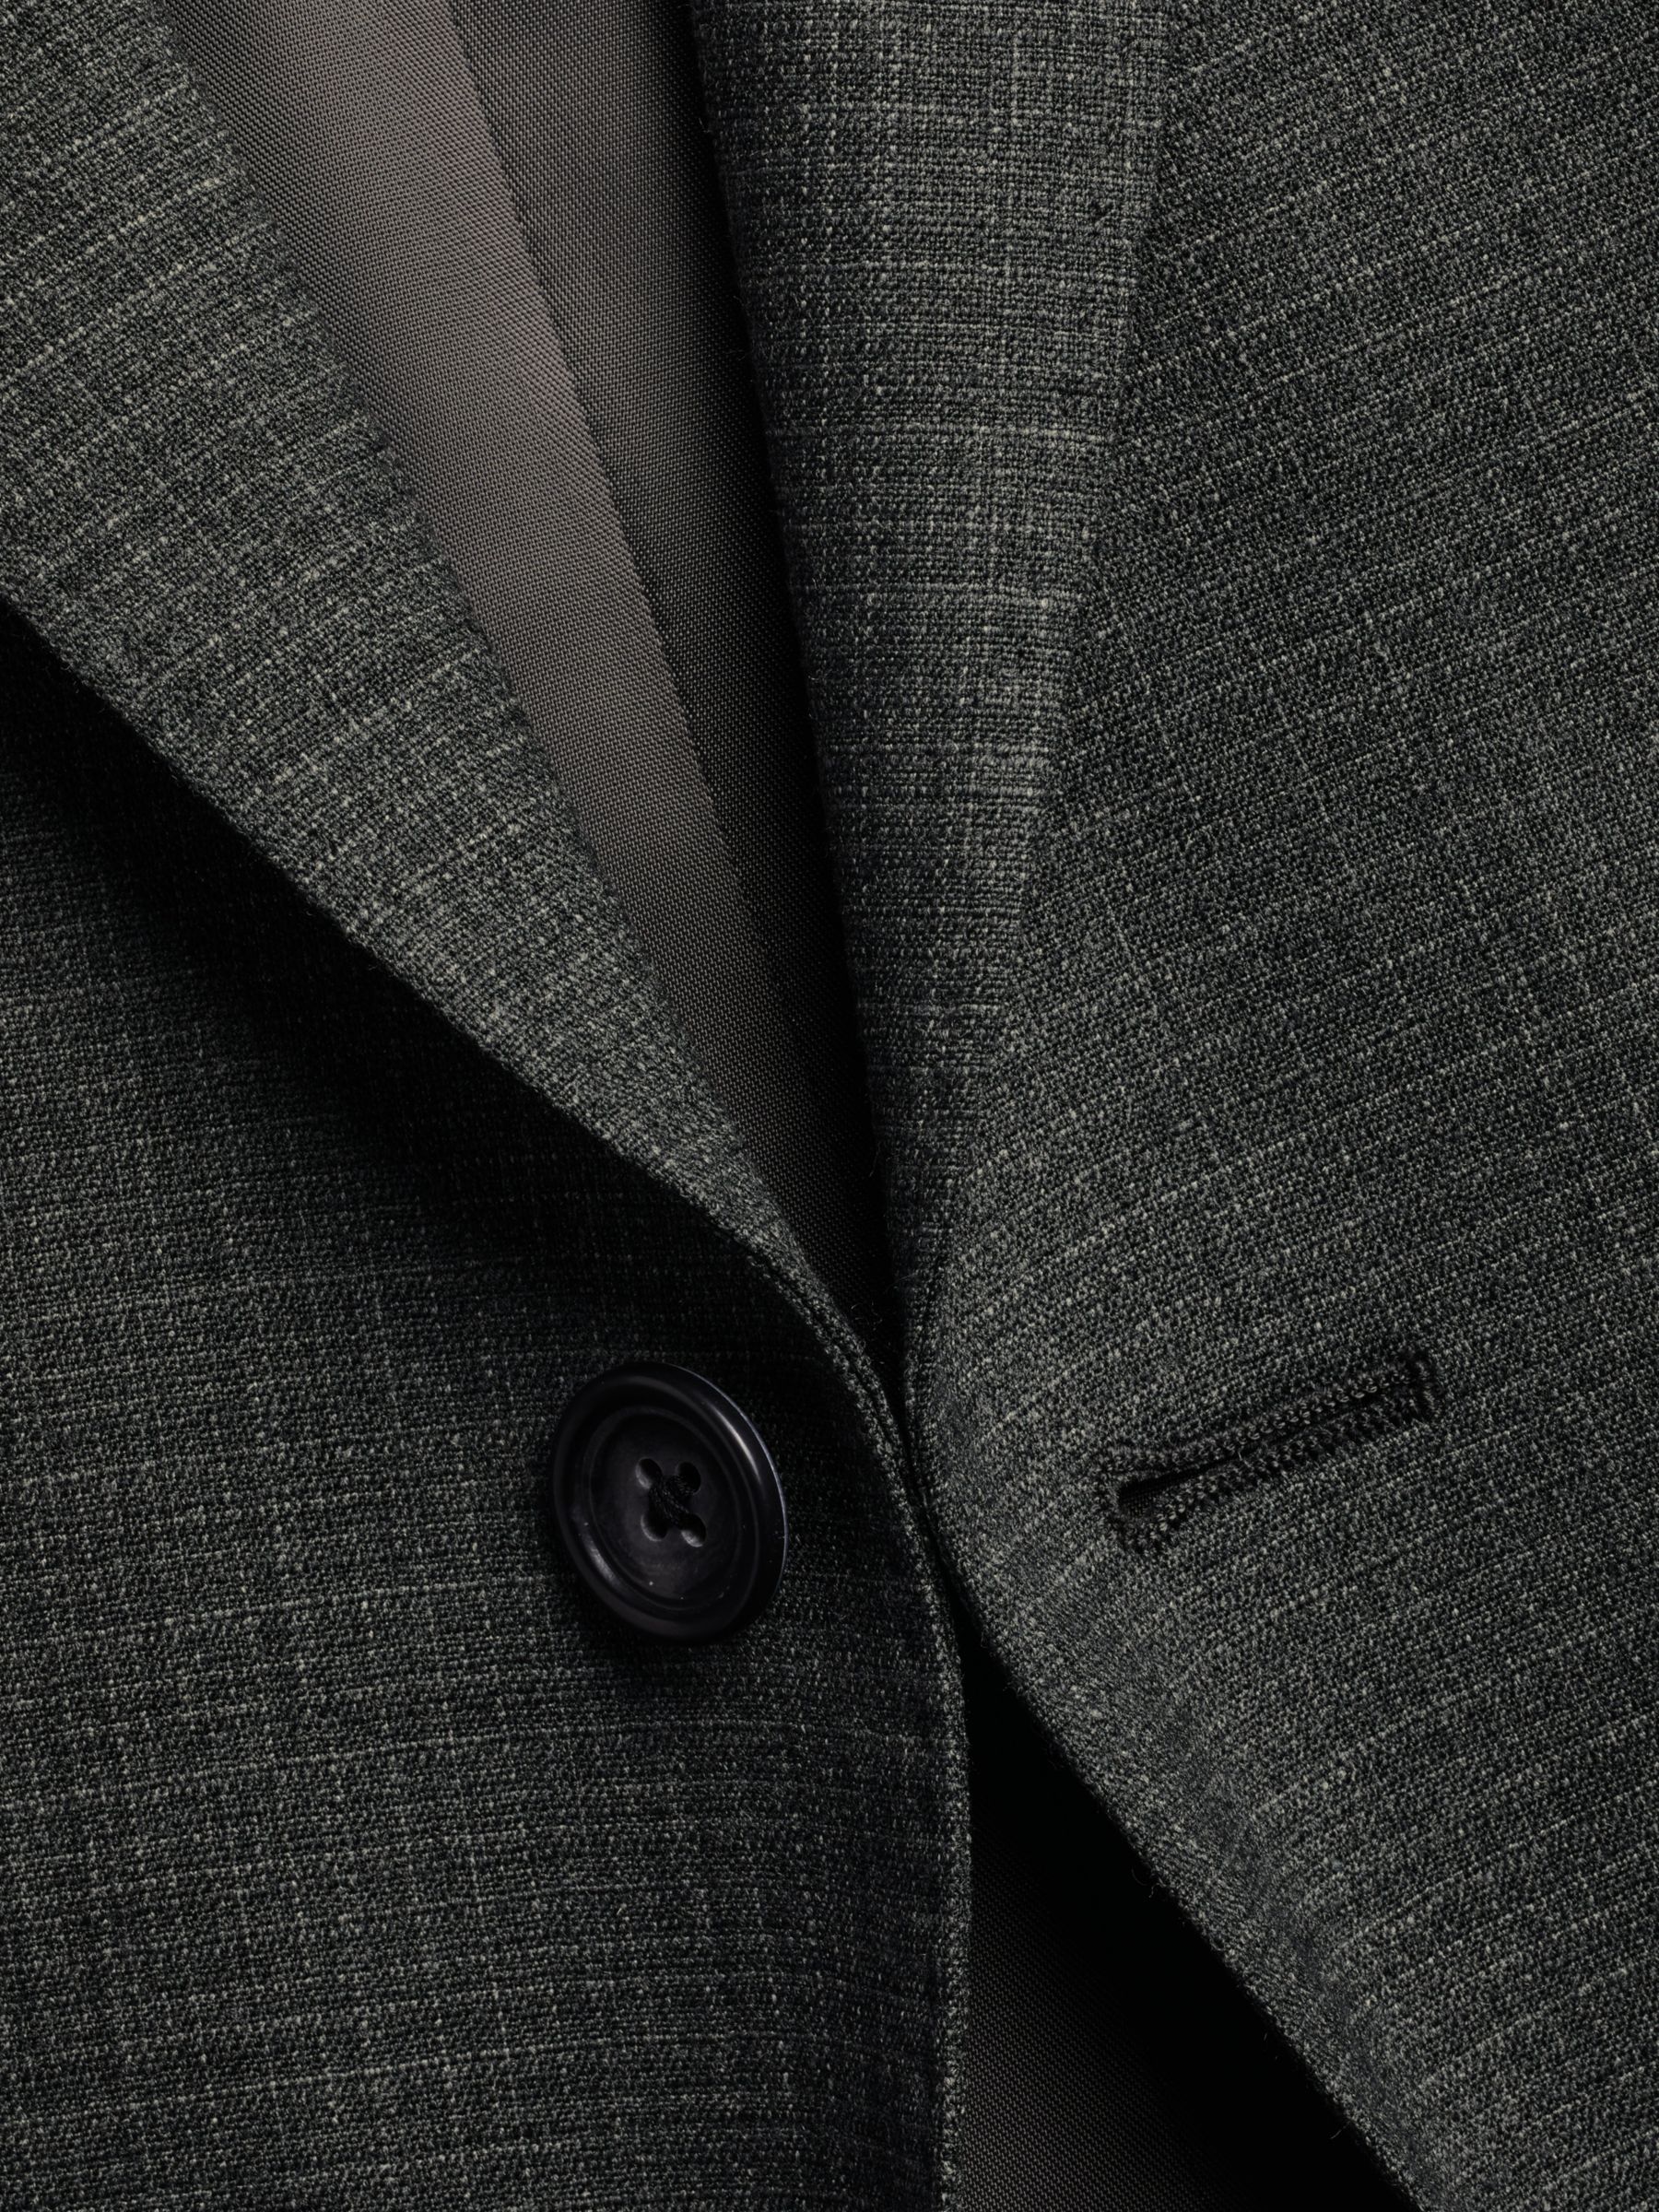 Charles Tyrwhitt Micro Grid Check Slim Fit Suit Jacket, Grey, 42R